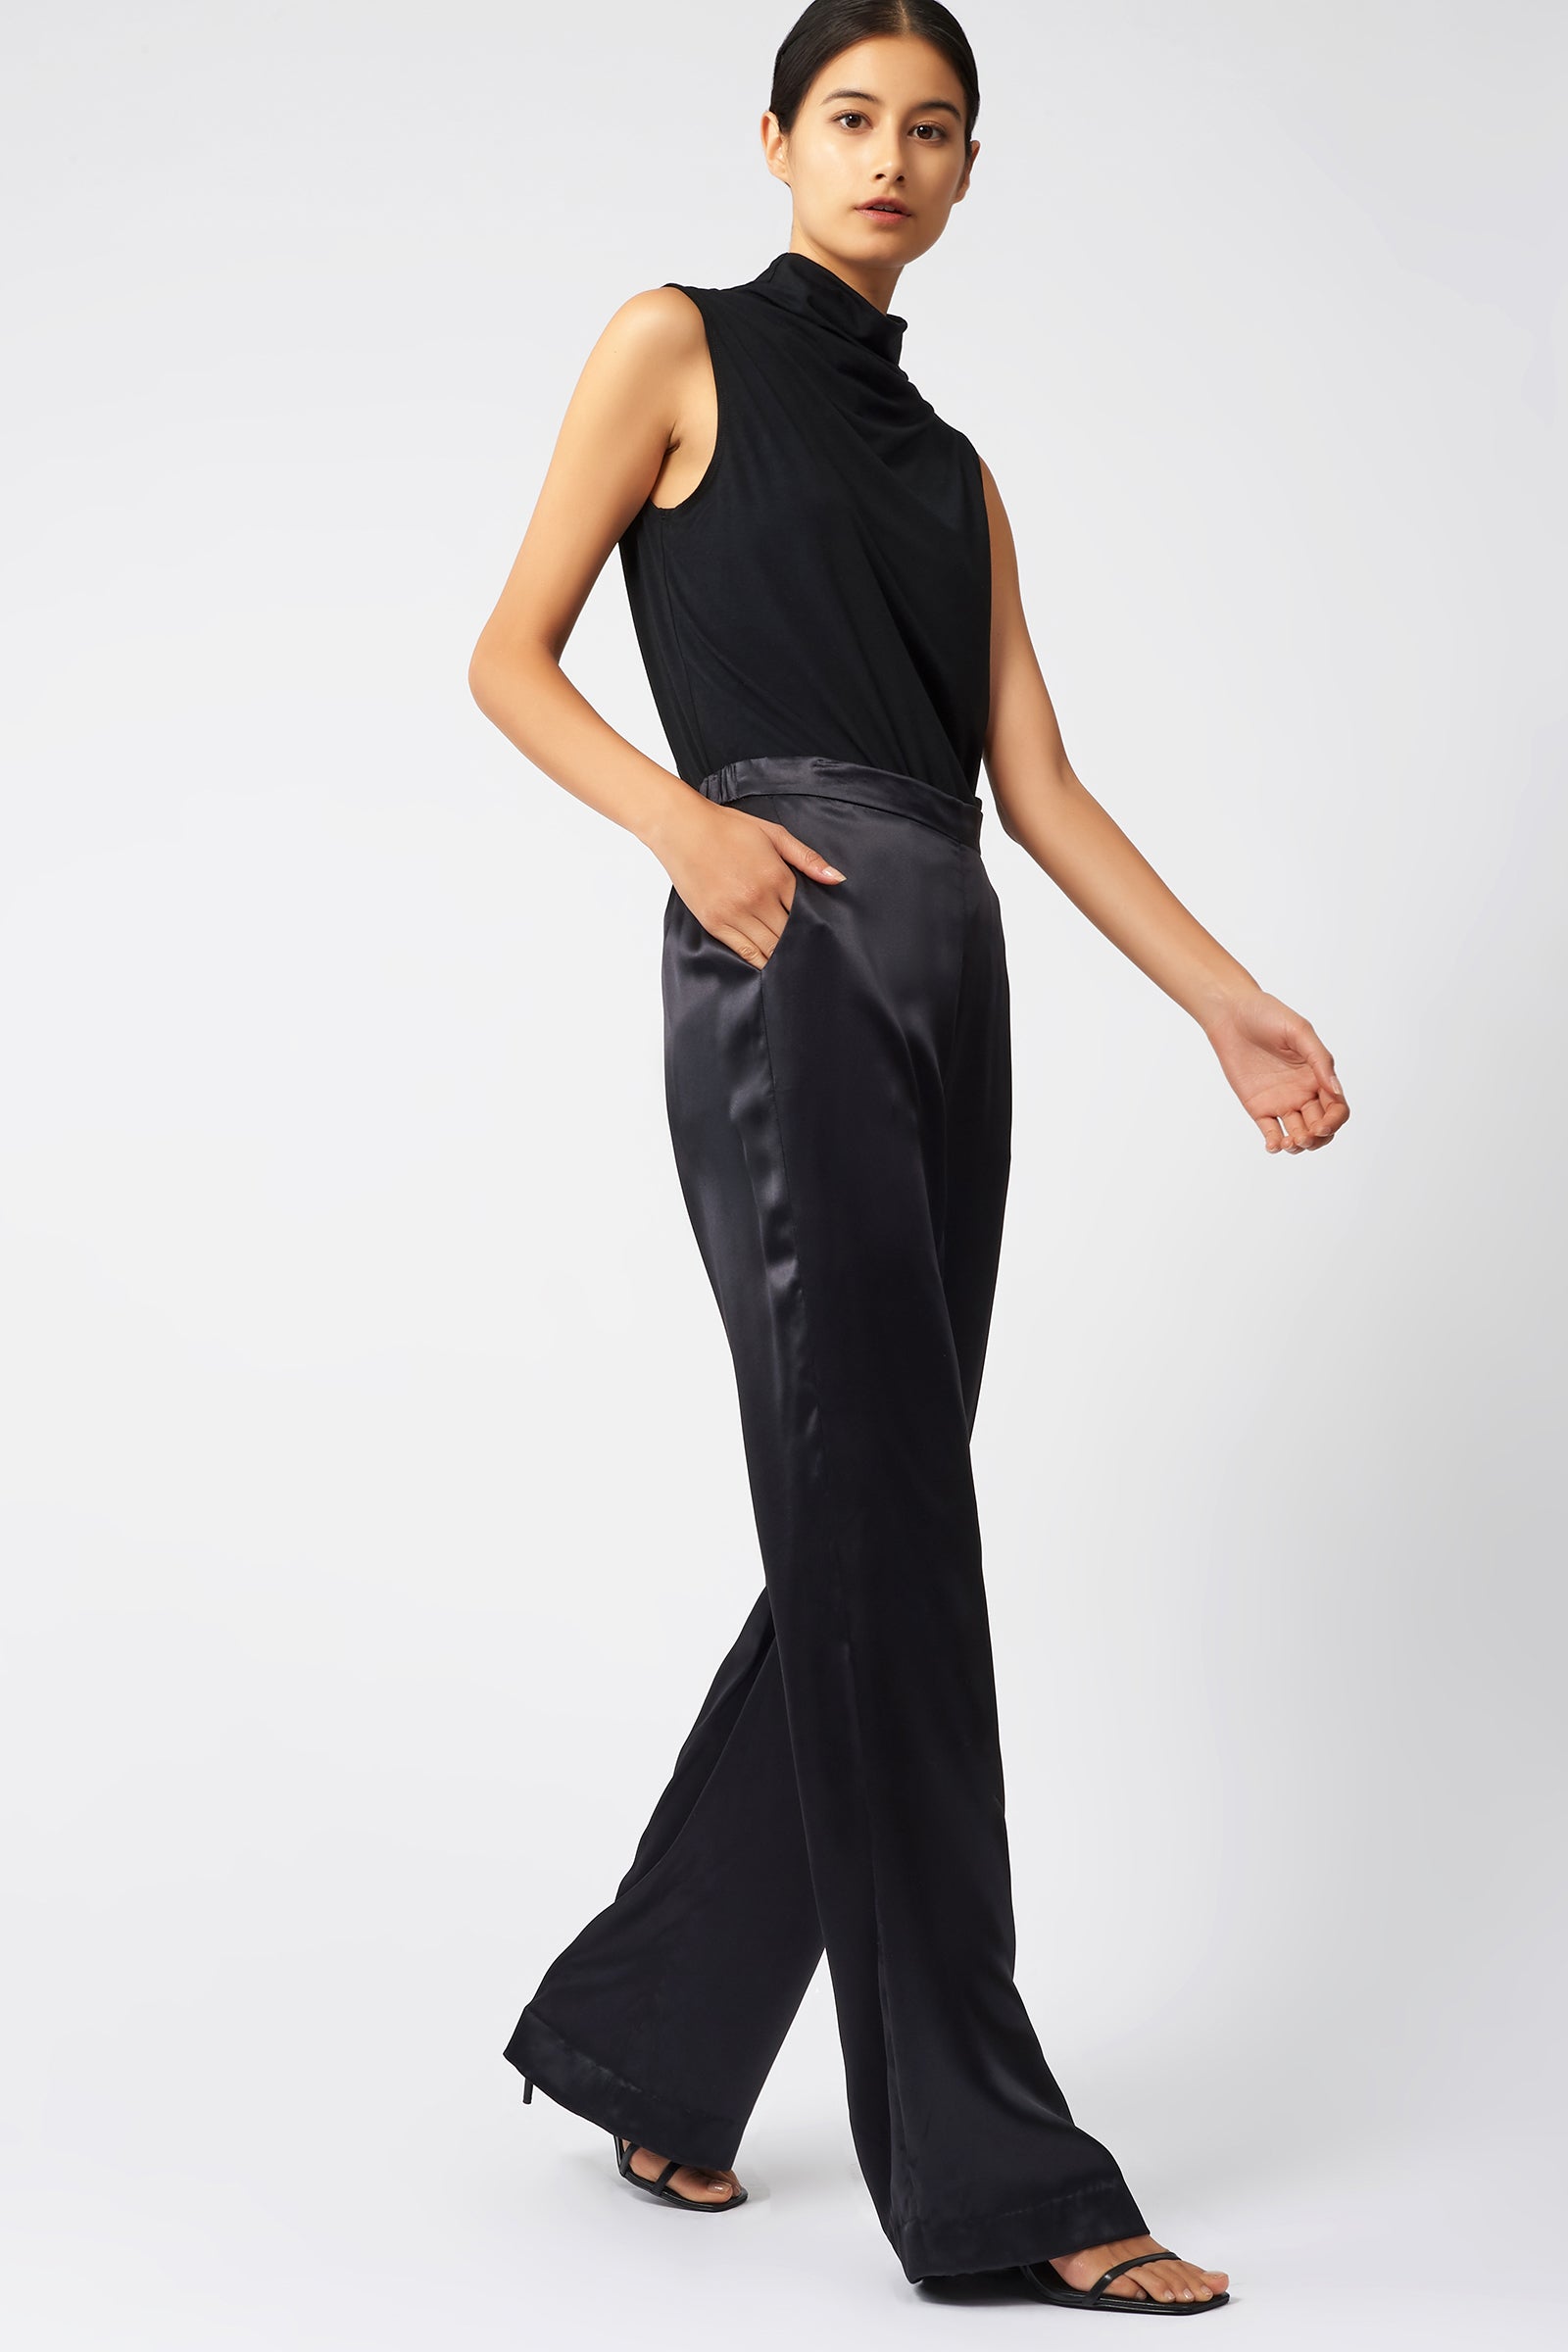 Kal Rieman Classic Silk Trouser in Black on Model Full Side View